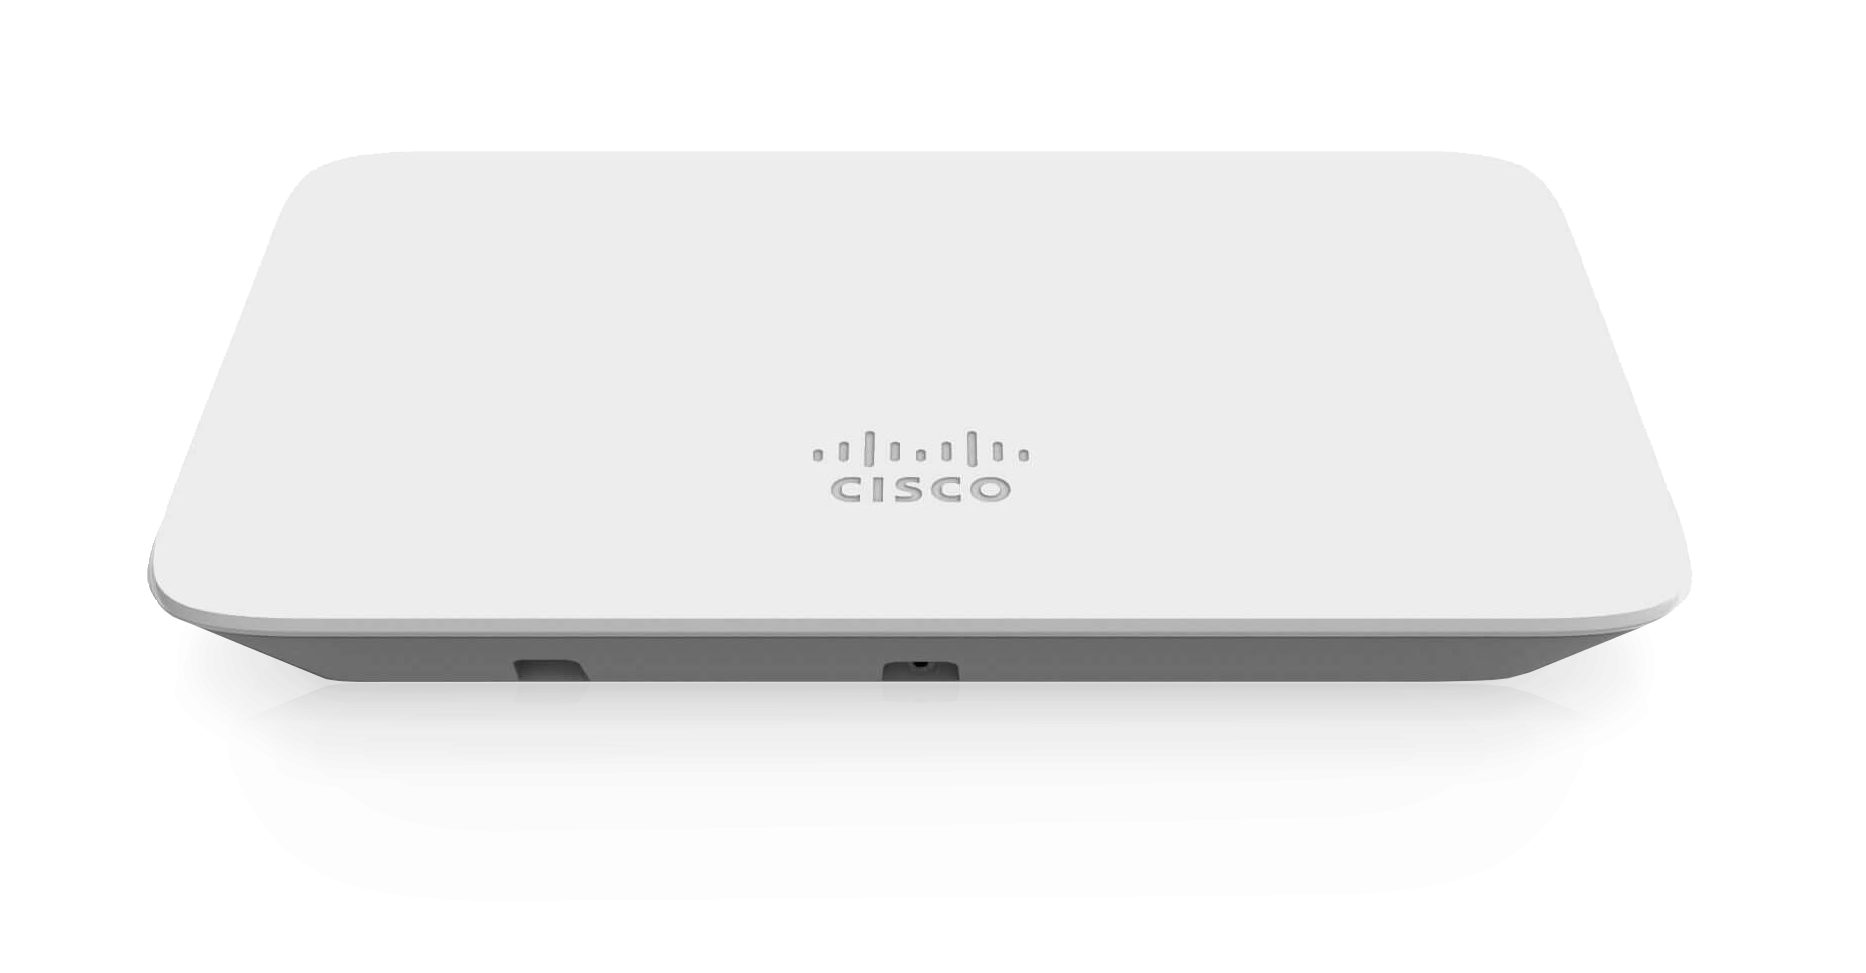 Cisco Meraki Router Transparent Background